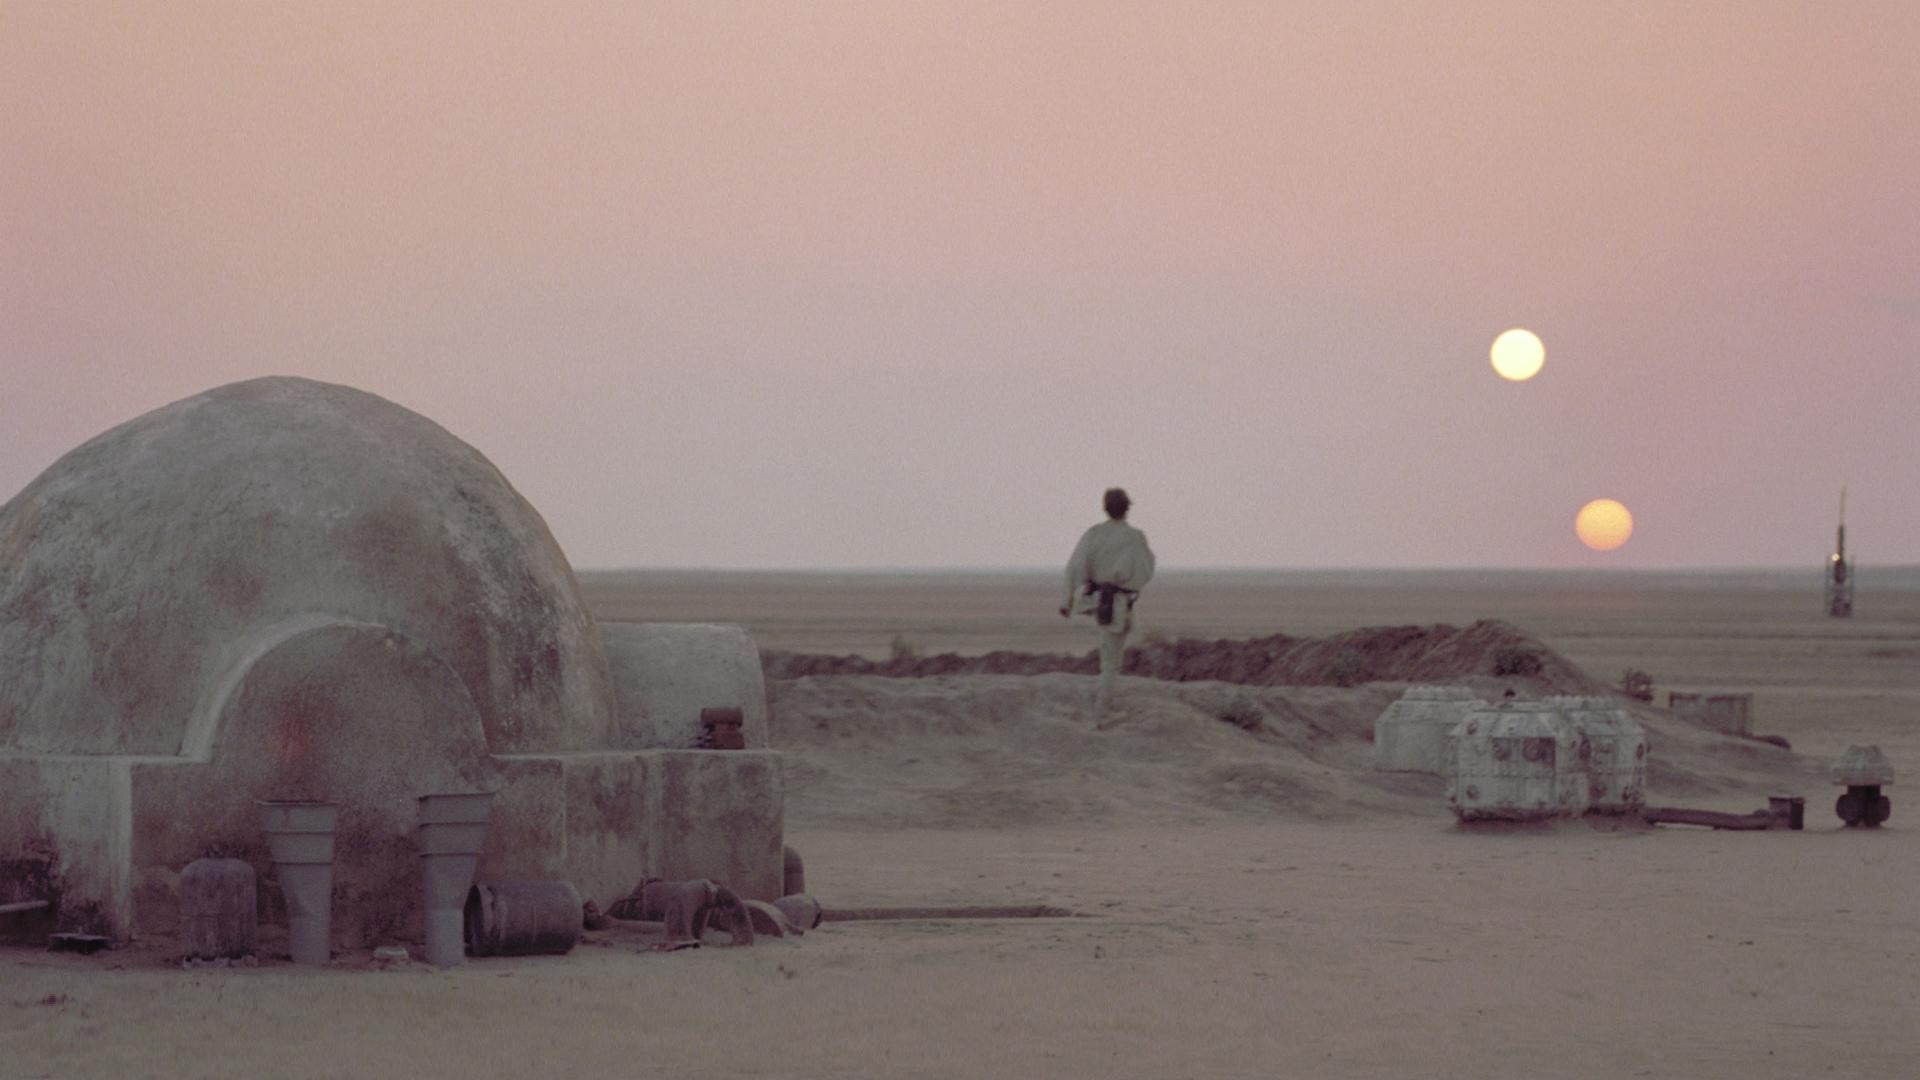 General 1920x1080 Star Wars science fiction movies Luke Skywalker Tatooine